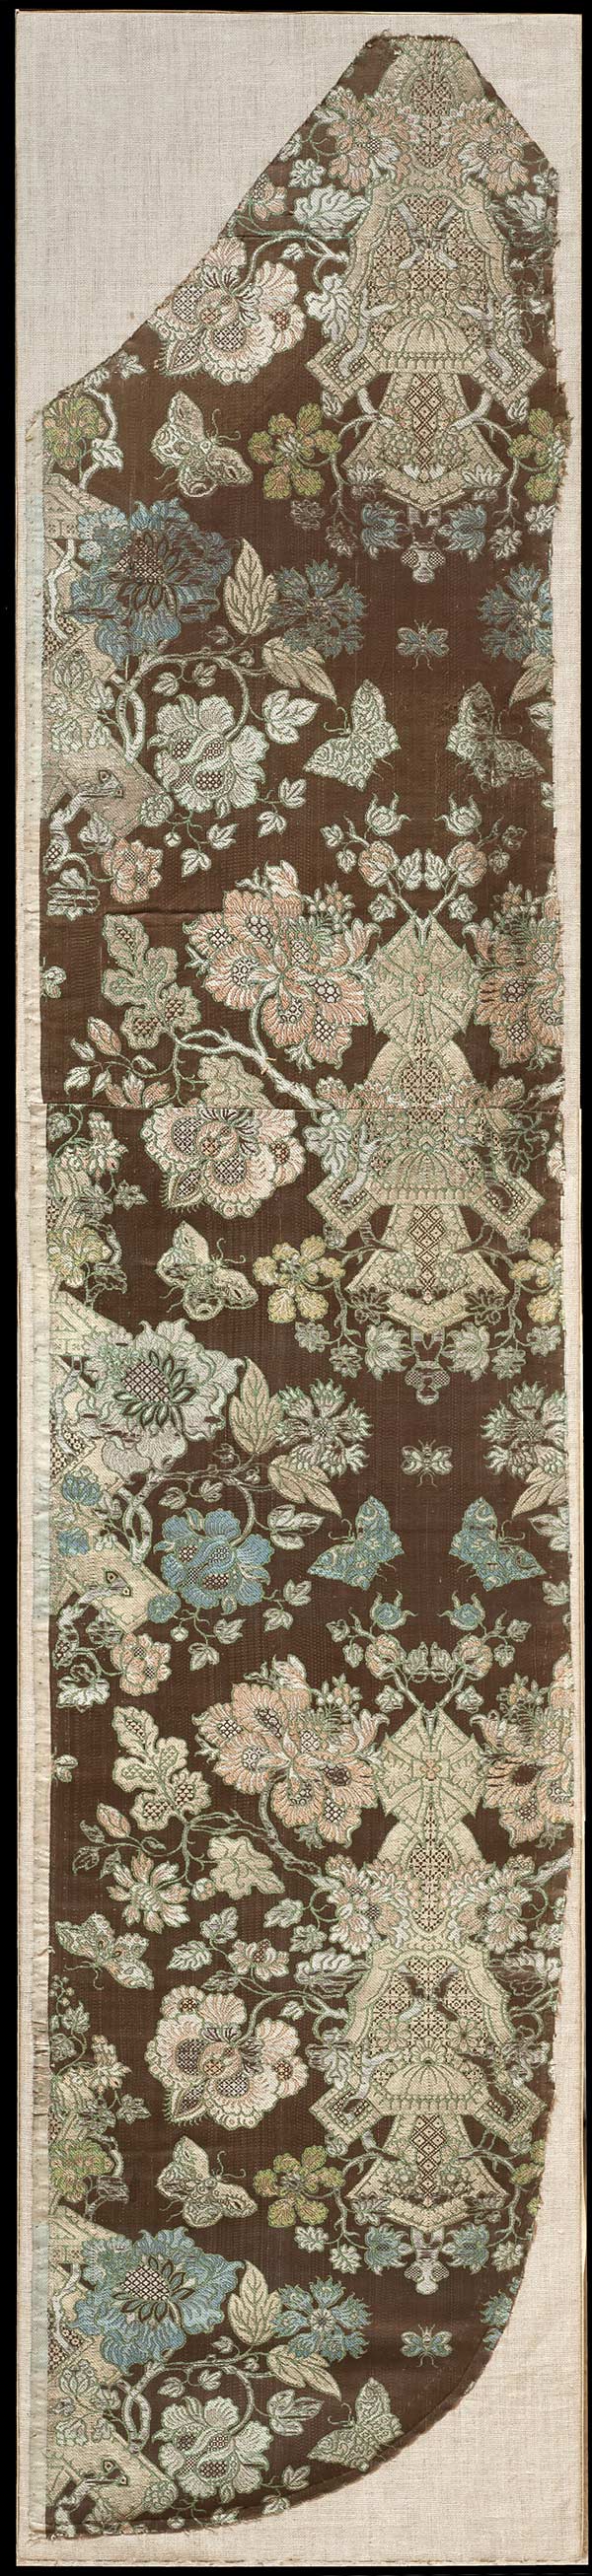 Spitalfields Silk, Joseph Dandridge, Brown satin ground brocaded with silver & gold threads patterned with flowers & butterflies, Circa 1705 - 1710, 127 x 27 cms